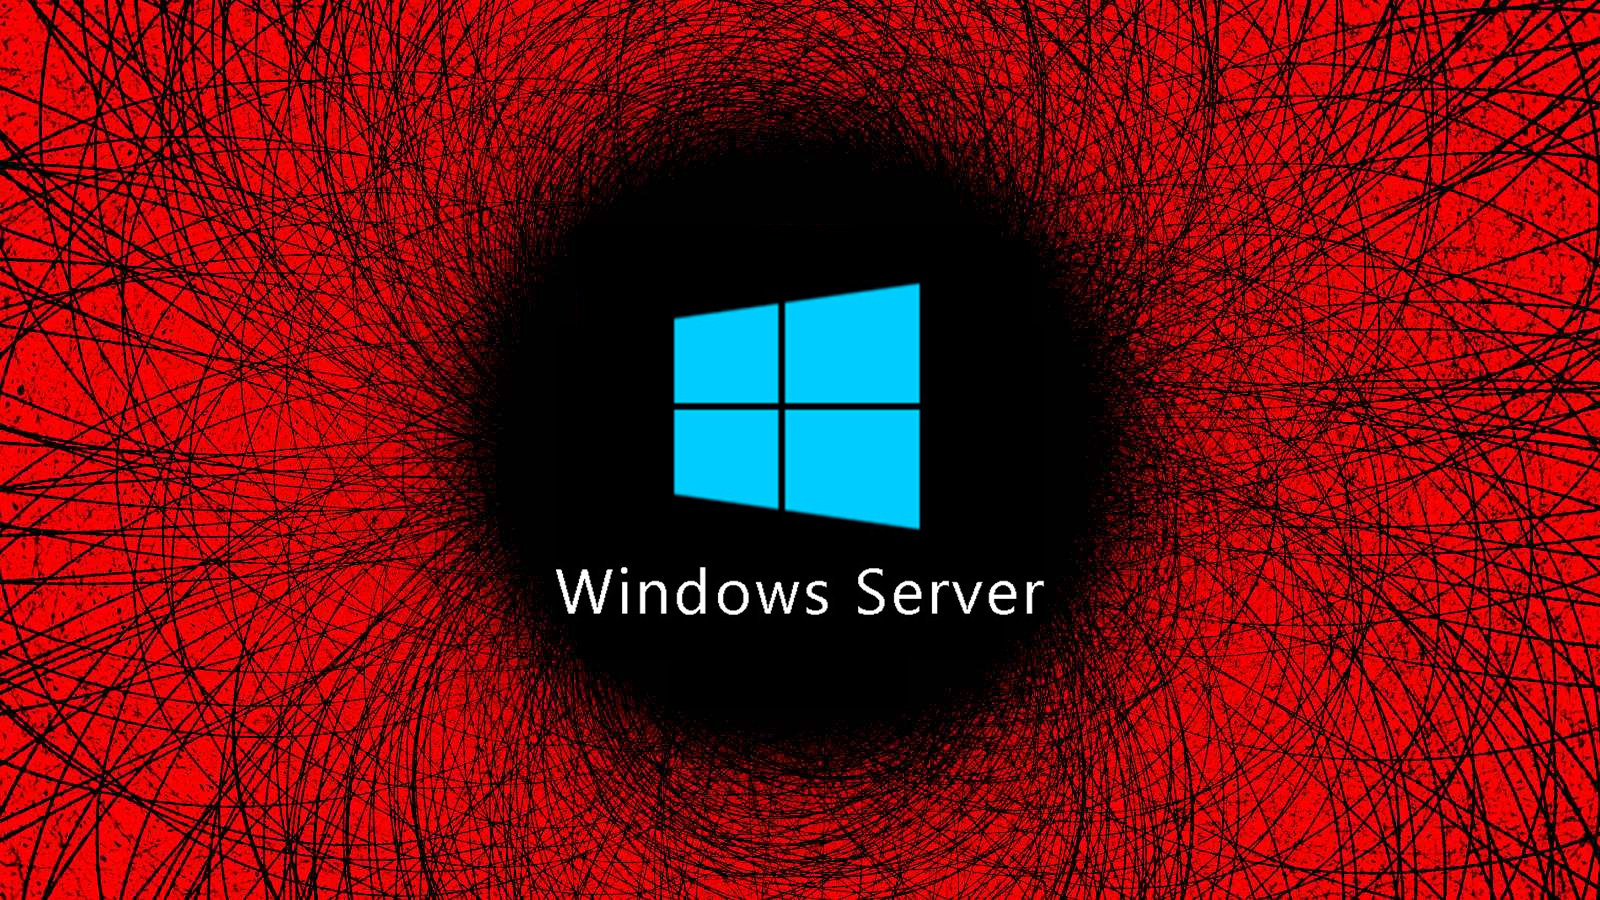 January Windows Server updates cause Netlogon issues